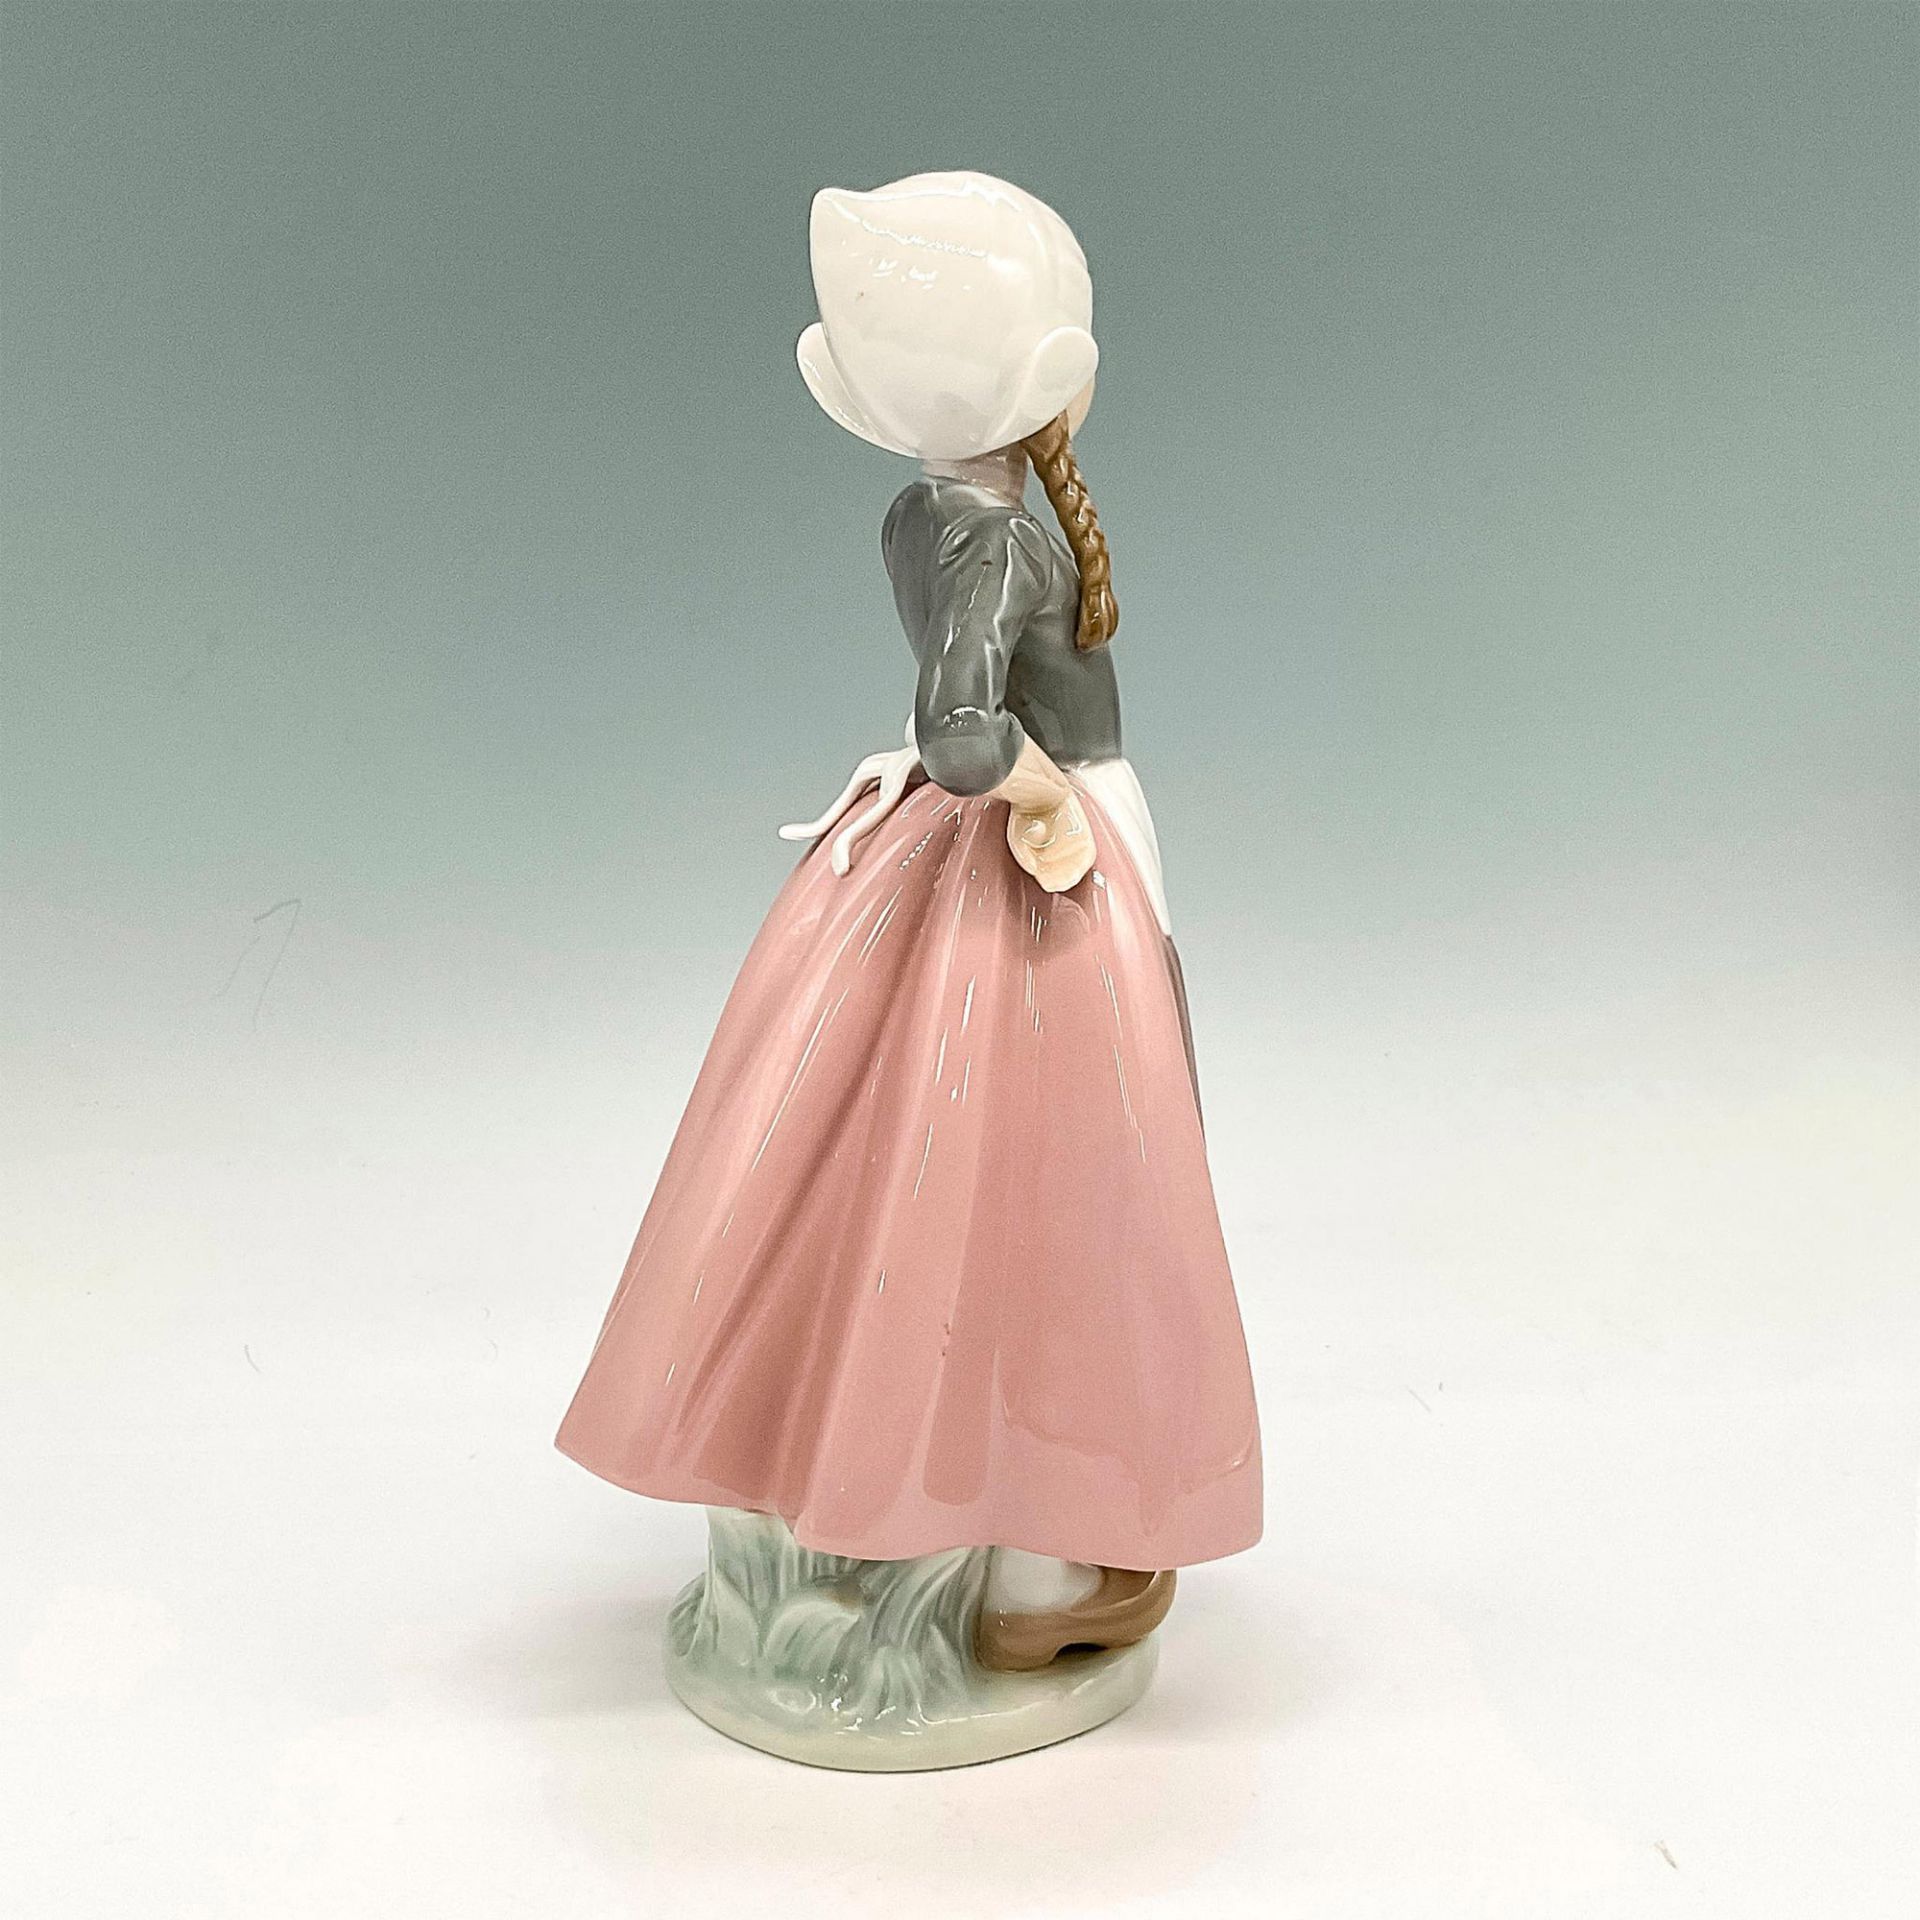 Dutch Girl 1005064 - Lladro Porcelain Figurine - Image 2 of 4